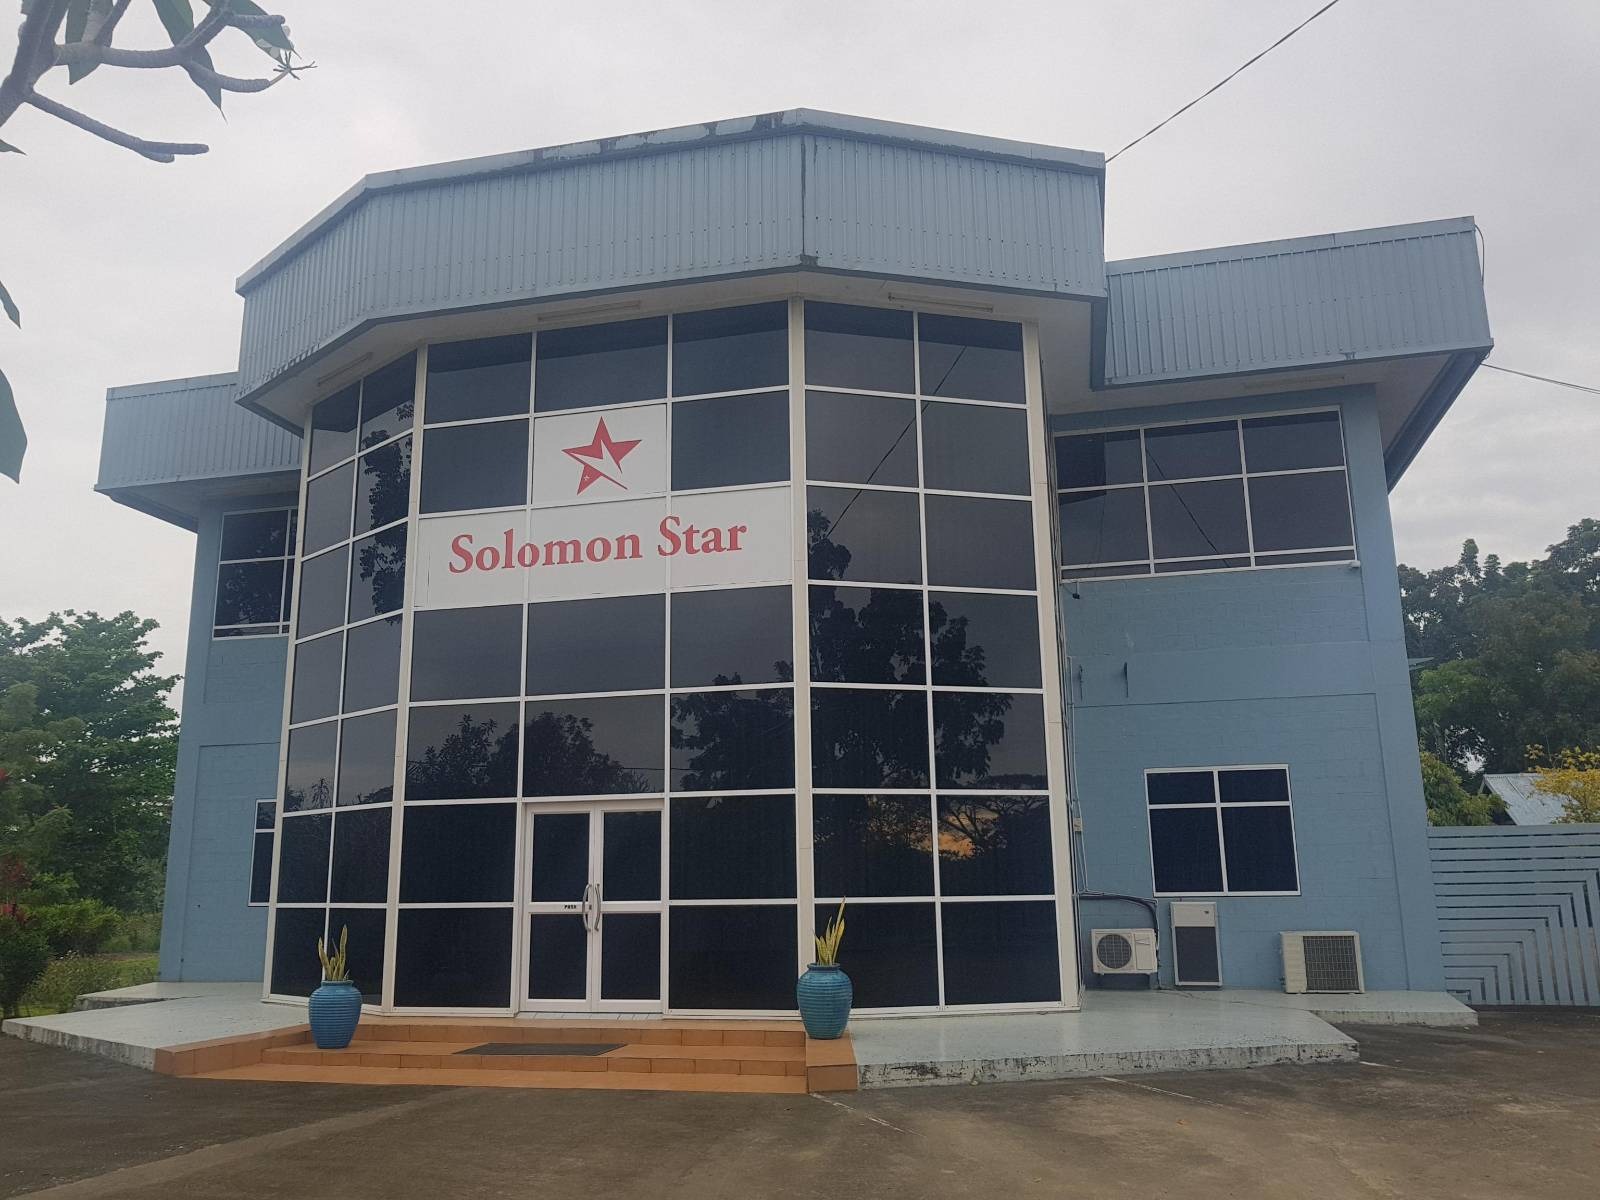 Solomon Star office